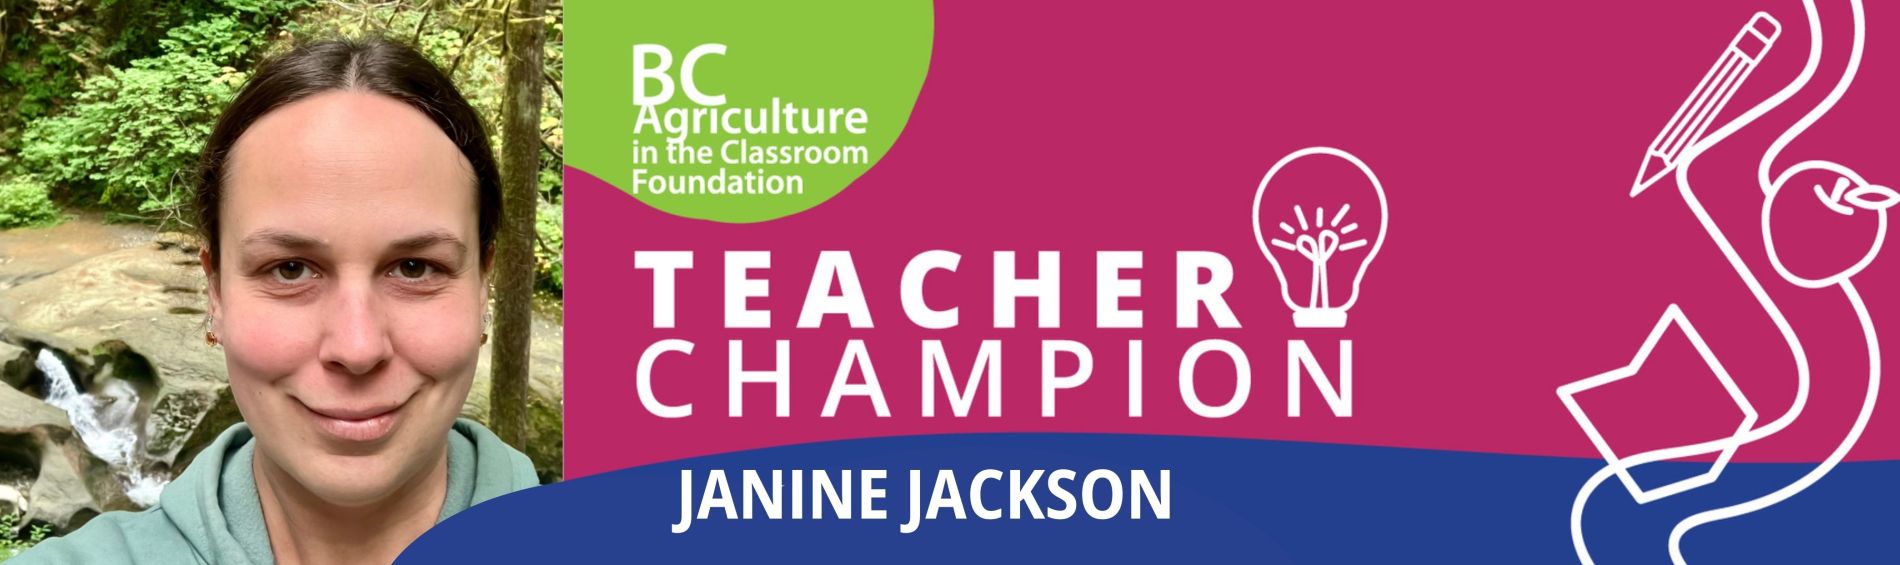 Teacher Champion - Janine Jackson